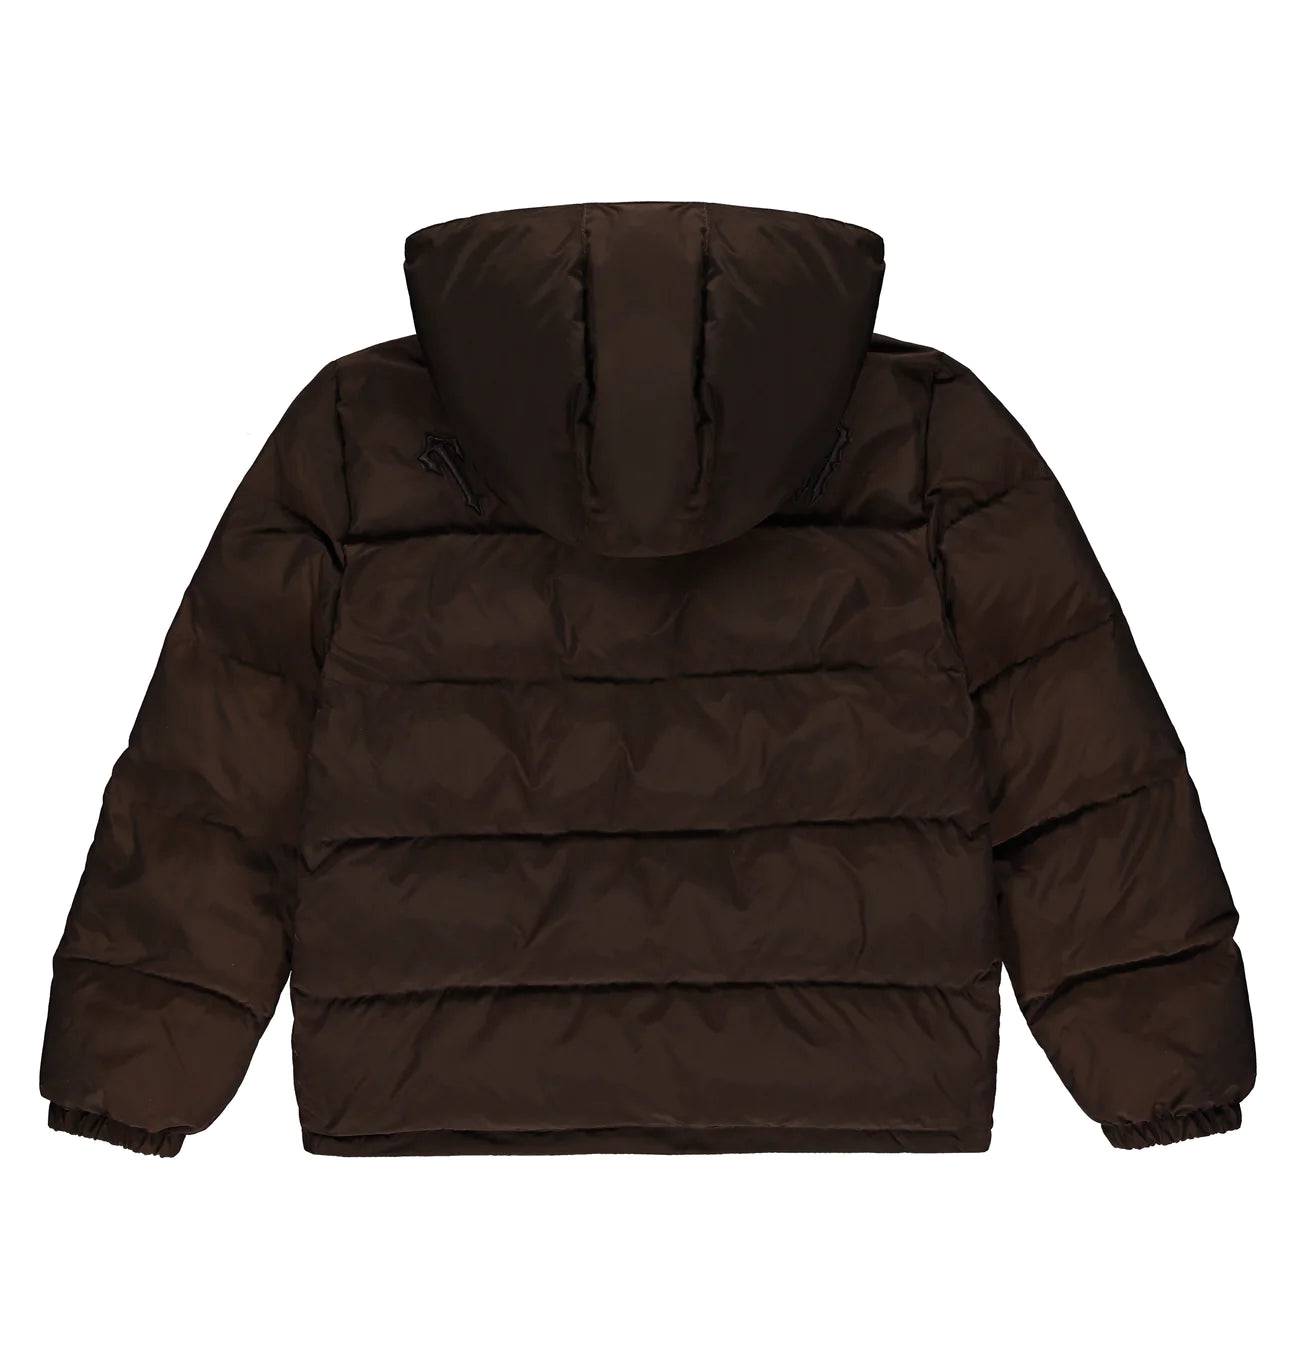 Trapstar Irongate Jacket Detachable Hood - Brown - No Sauce The Plug